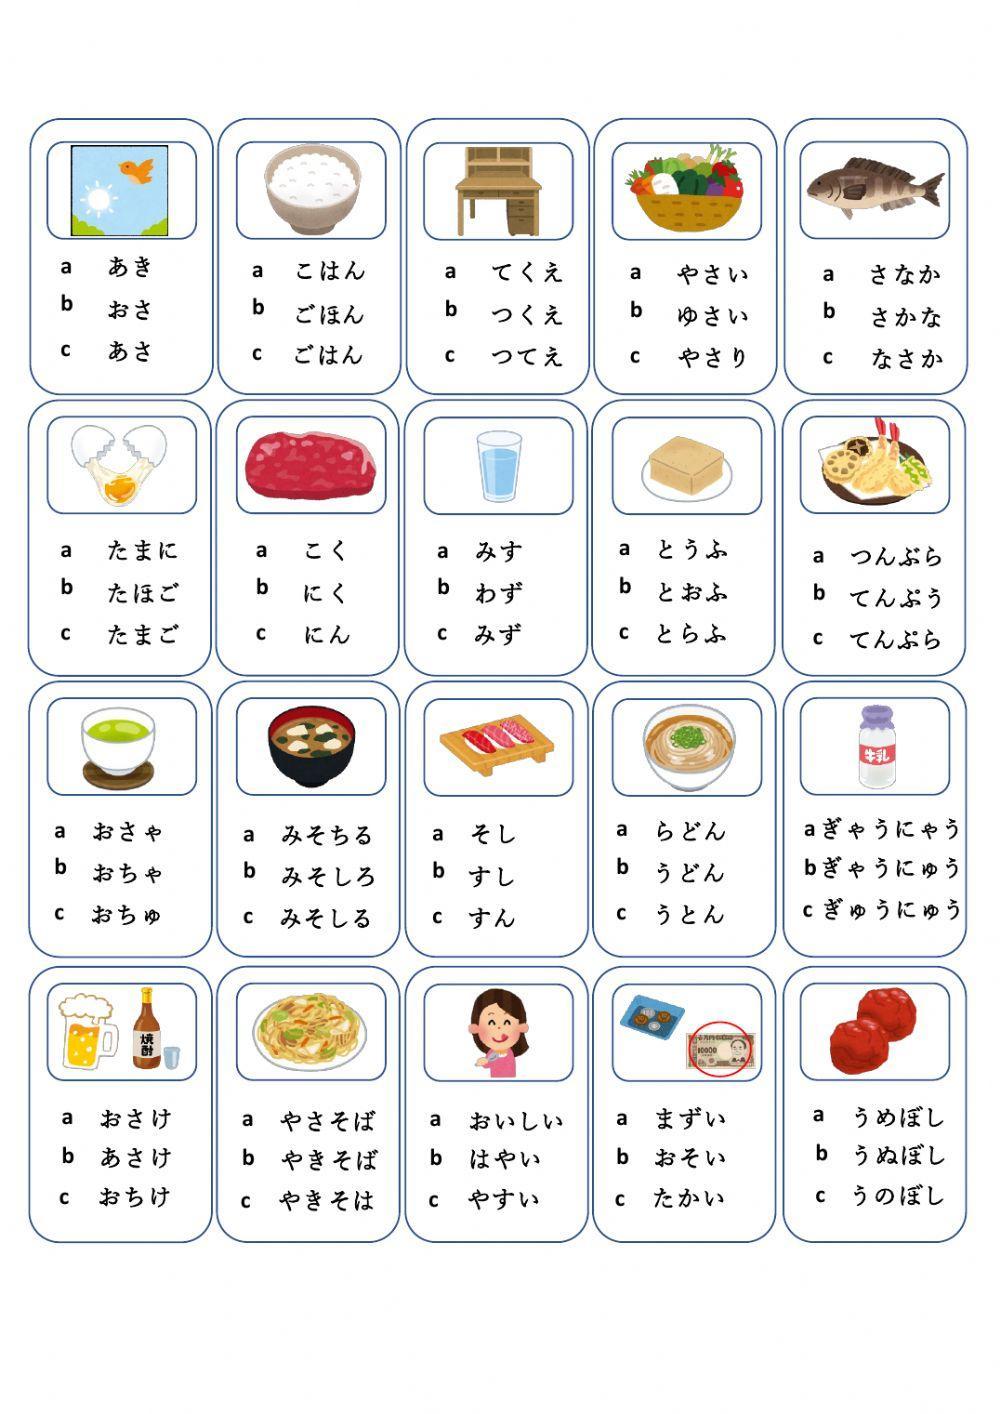 Choose the right answer hiragana